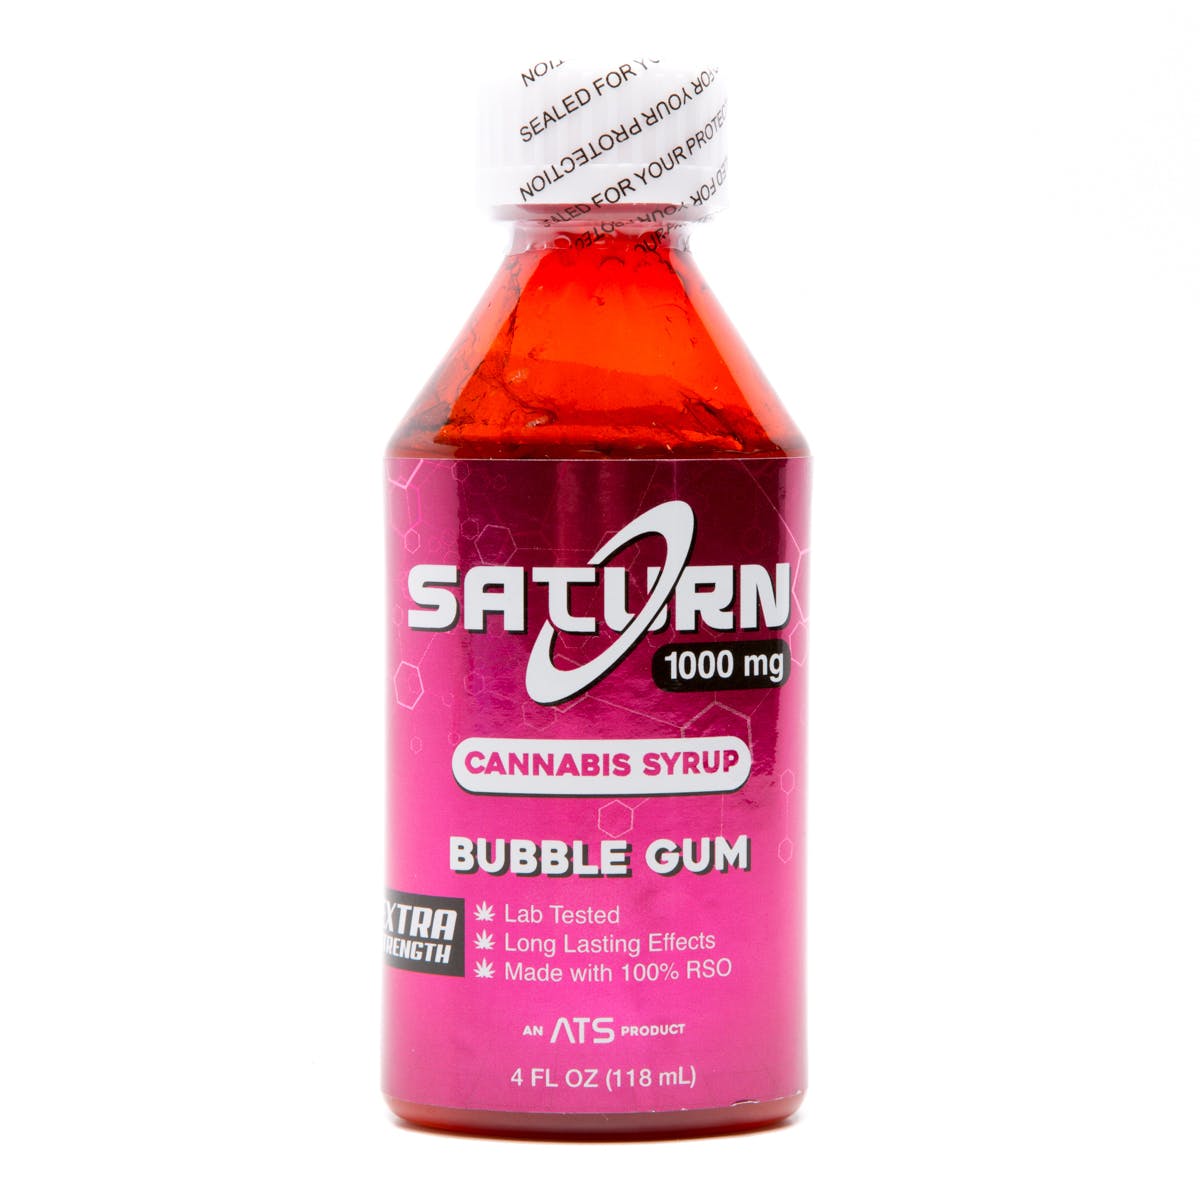 Bubble Gum Cannabis Syrup, 1000mg